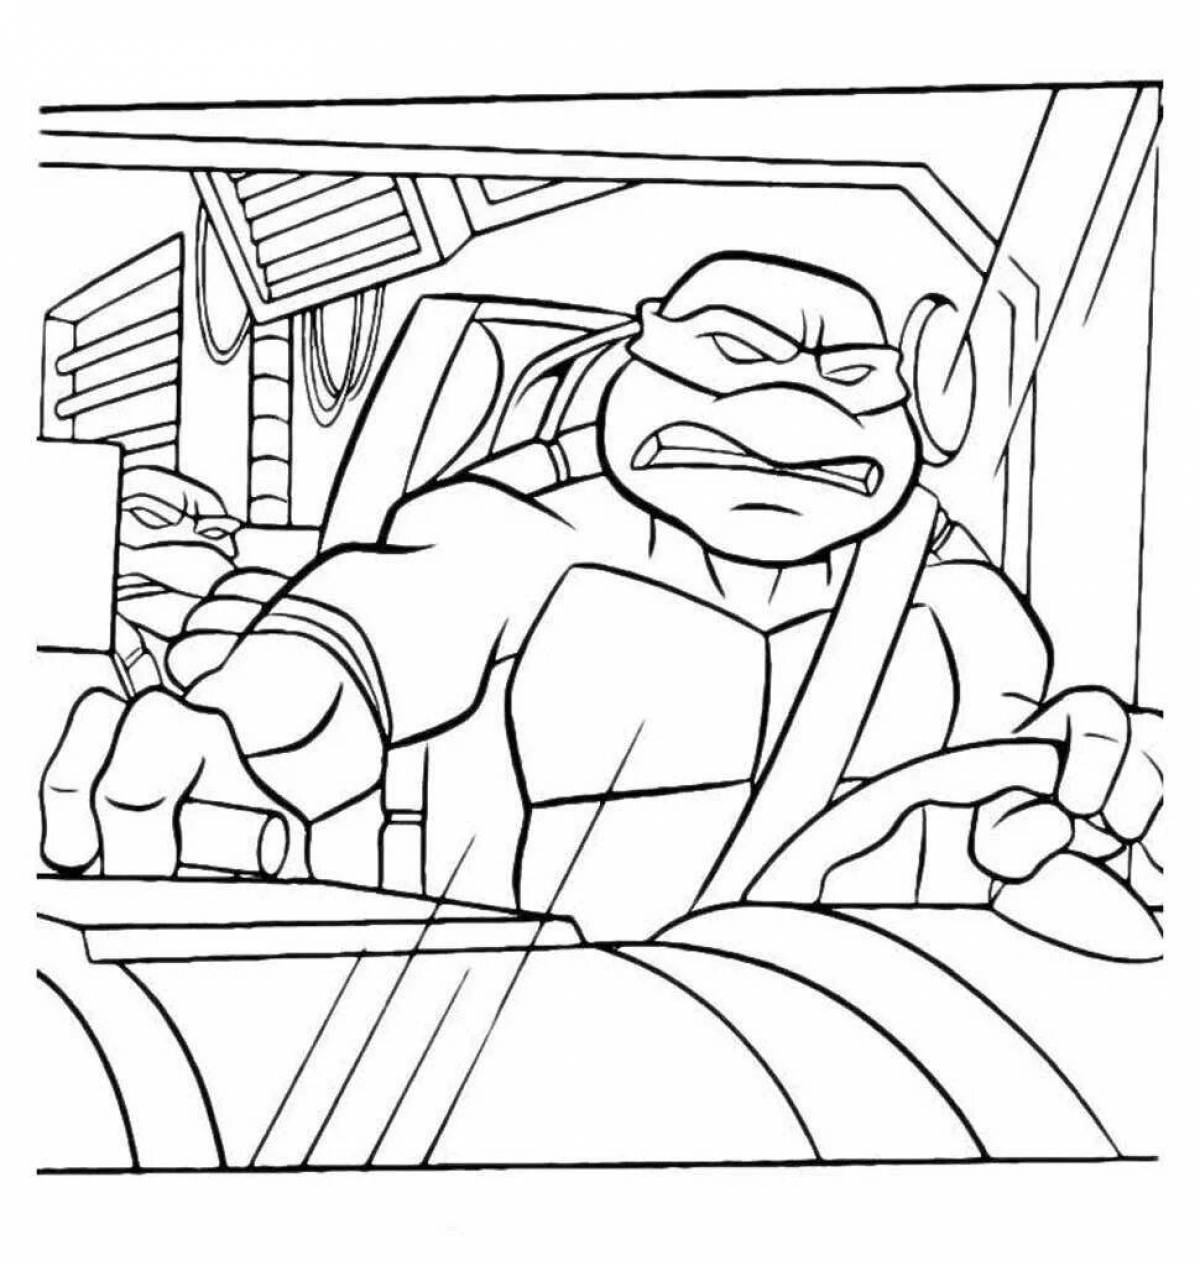 Teenage Mutant Ninja Turtles dazzling coloring book